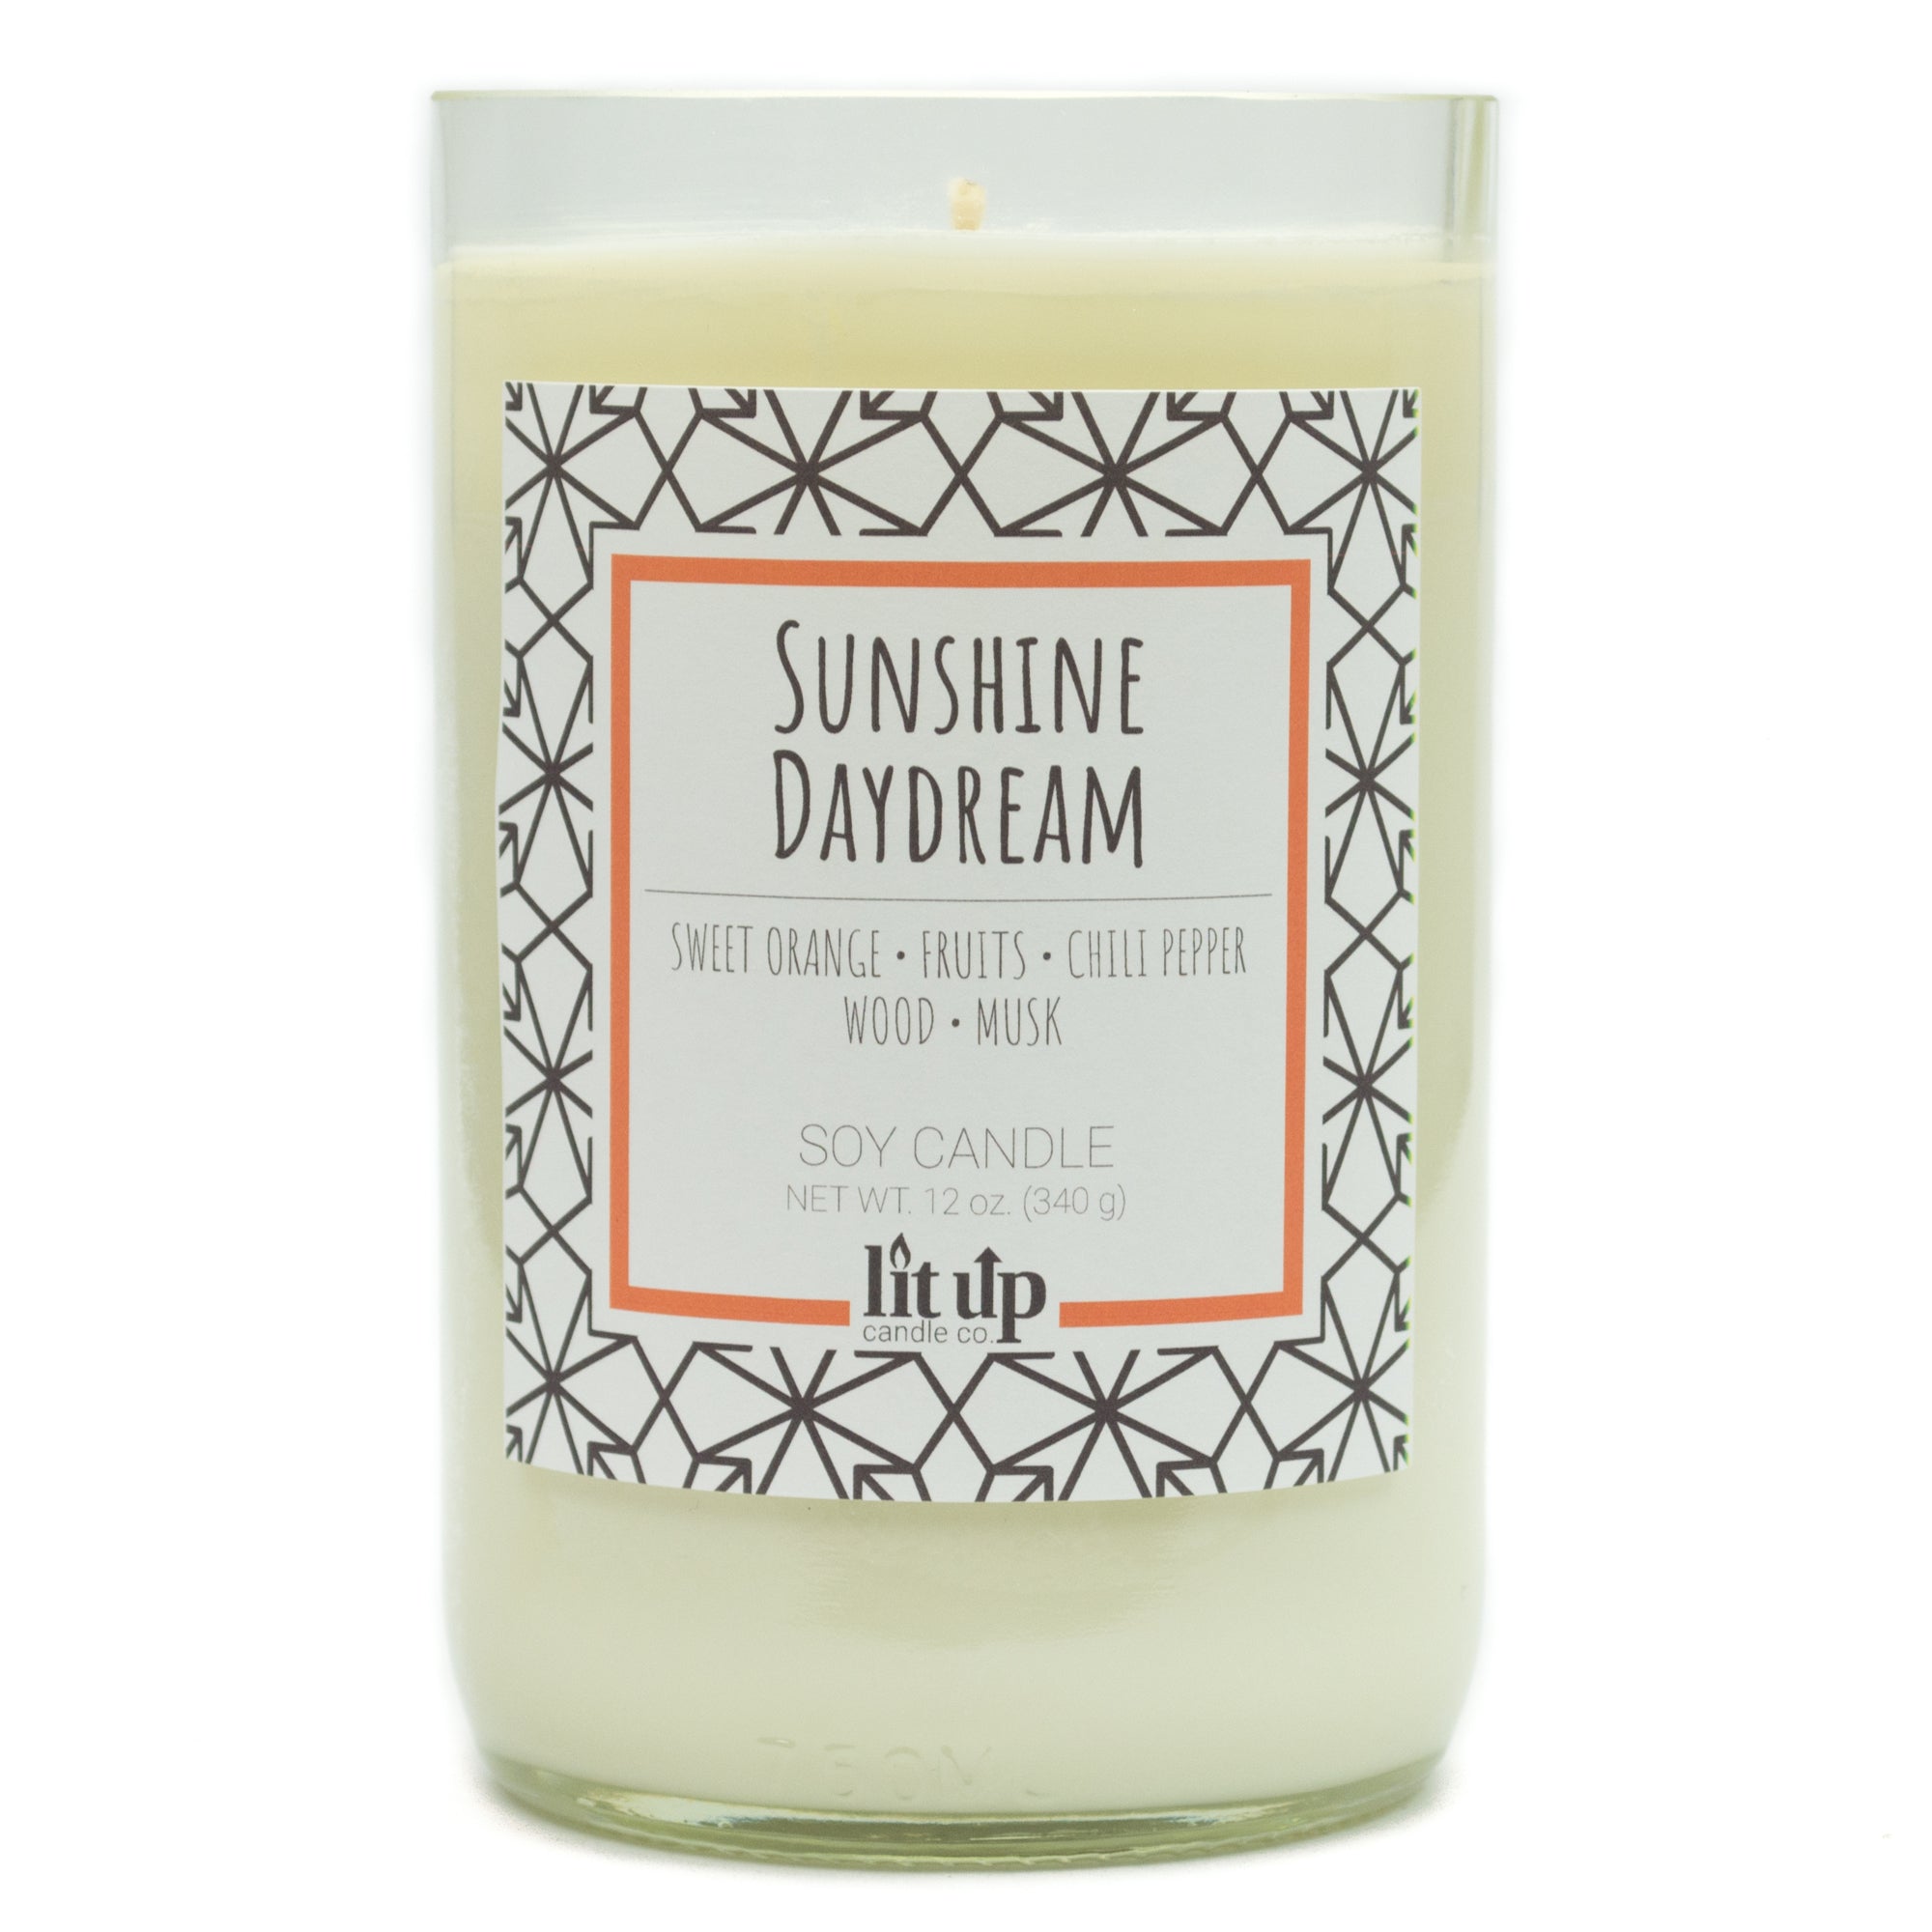 Sunshine Daydream scented 12 oz. soy candle in upcycled wine bottle - FKA Sweet Orange & Chili Pepper